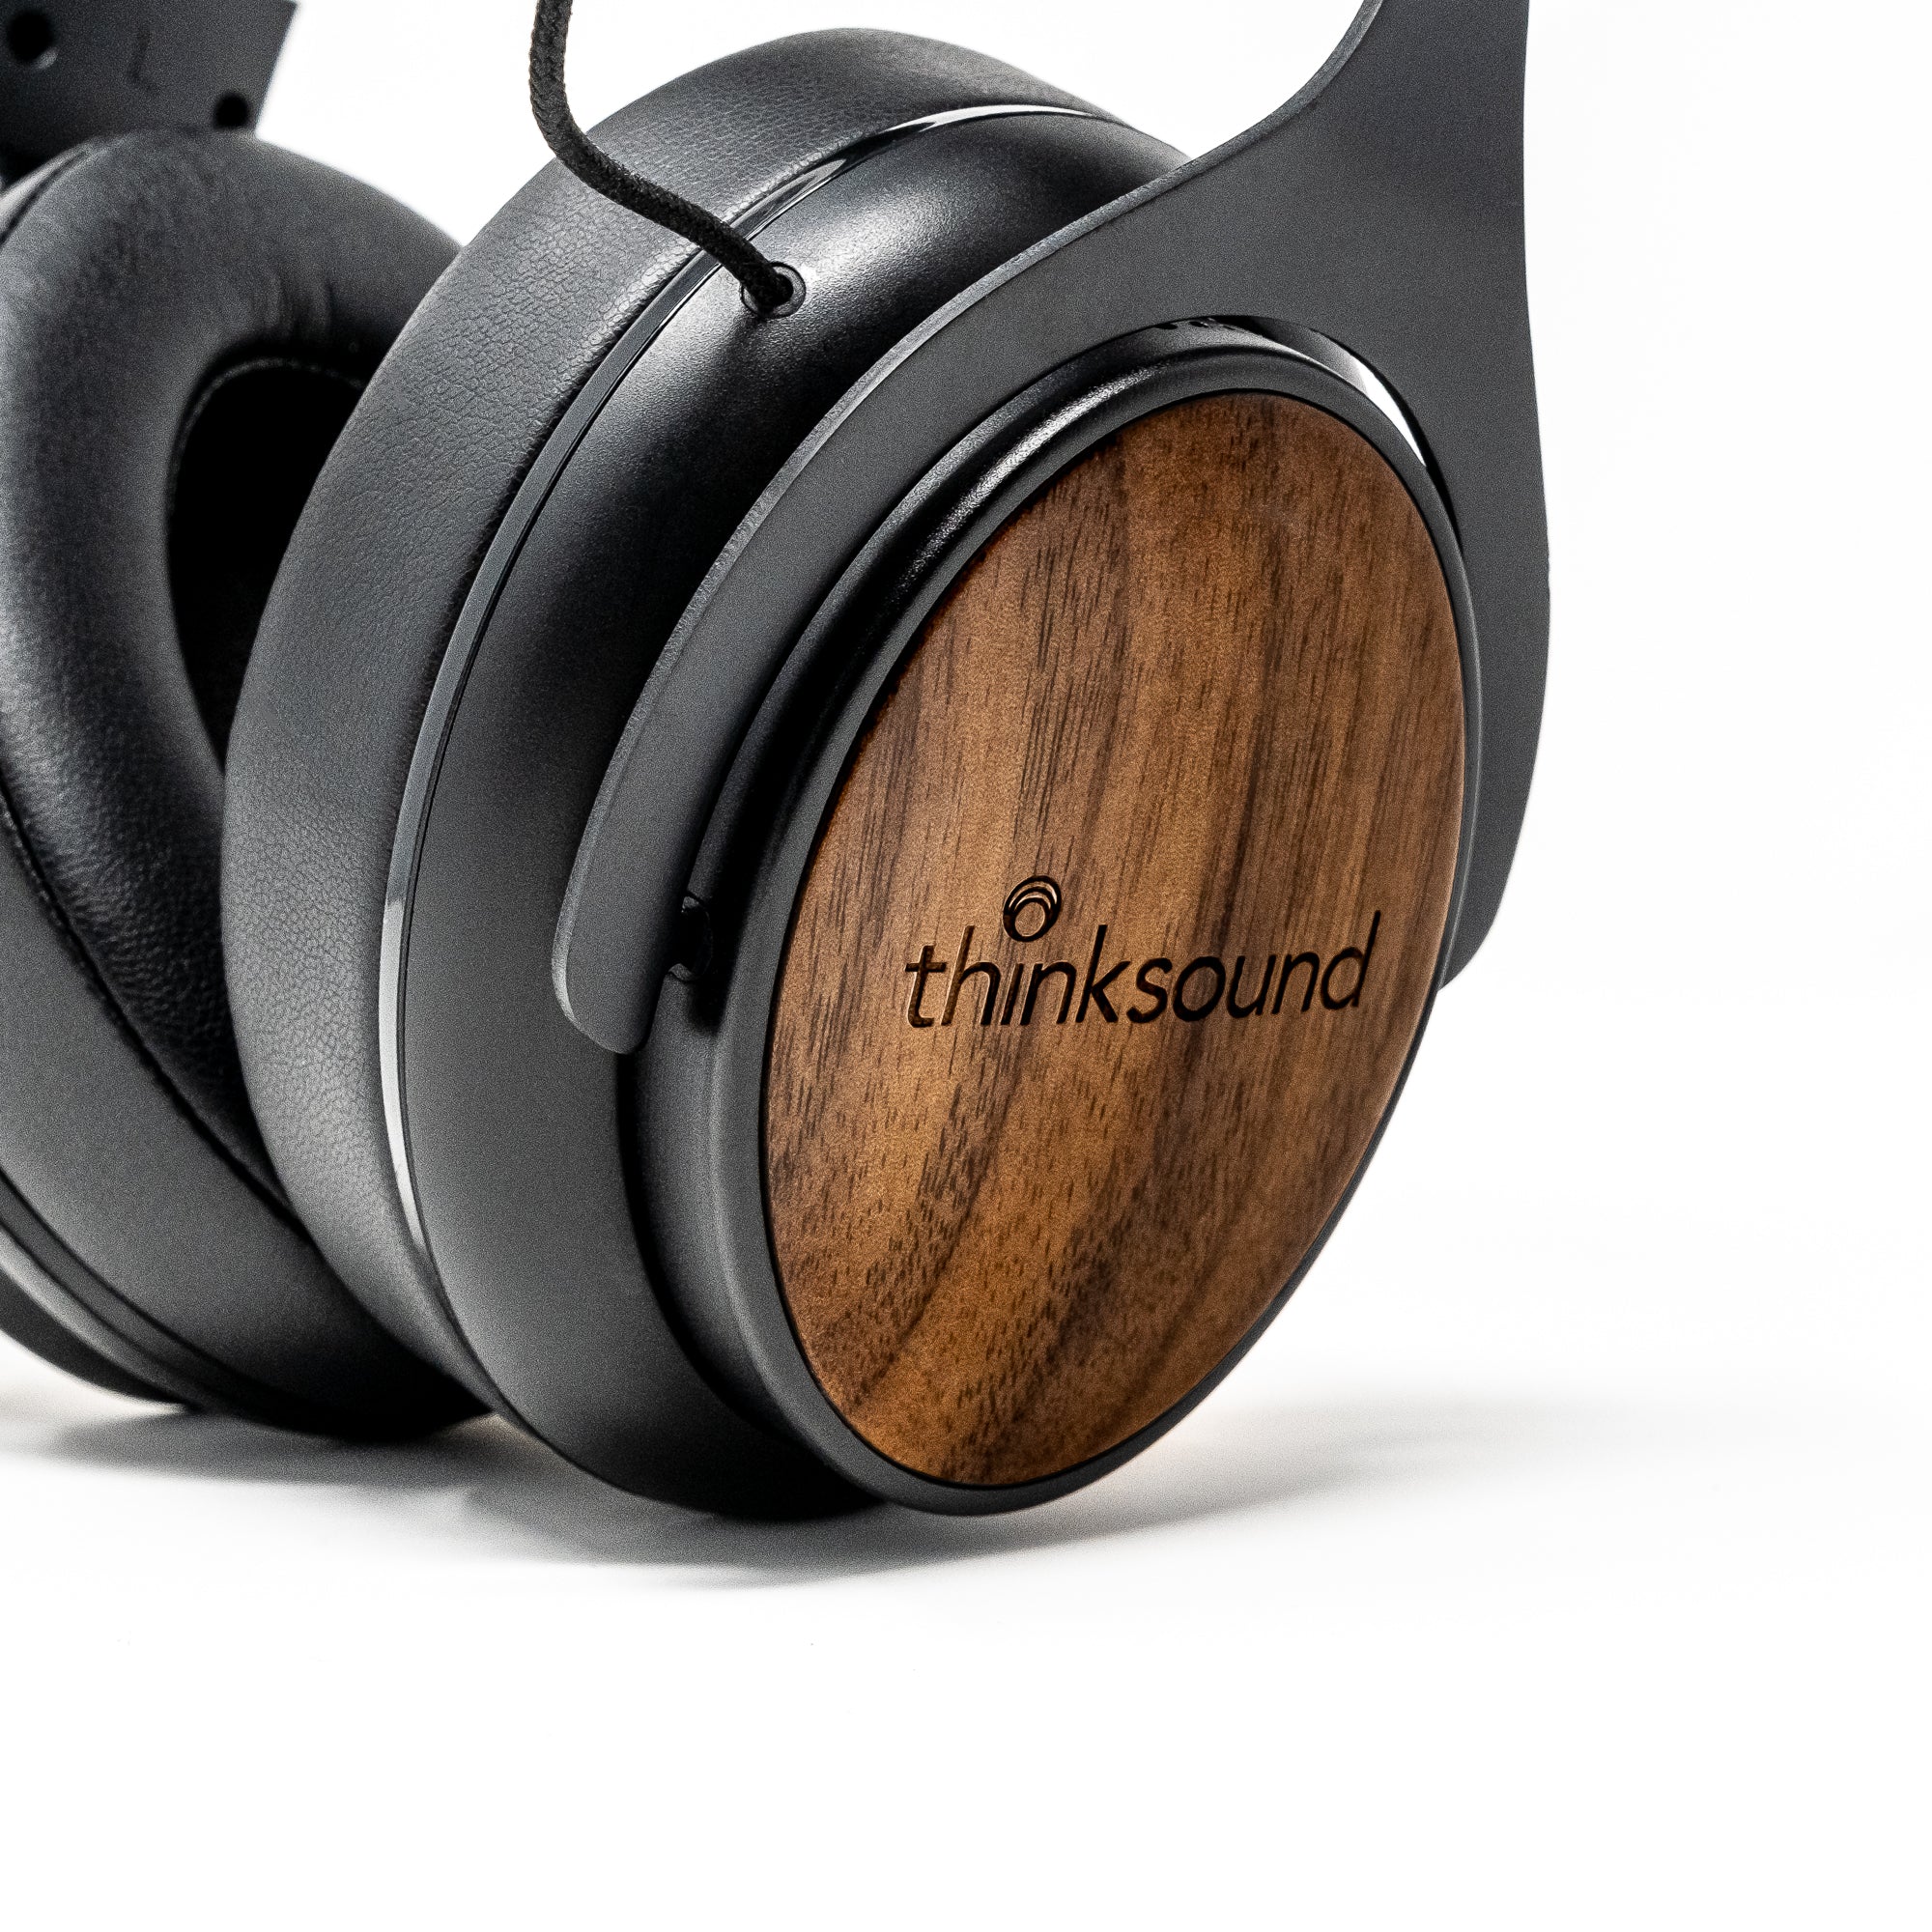 thinksound ov21 headphones close-up of walnut housing cover